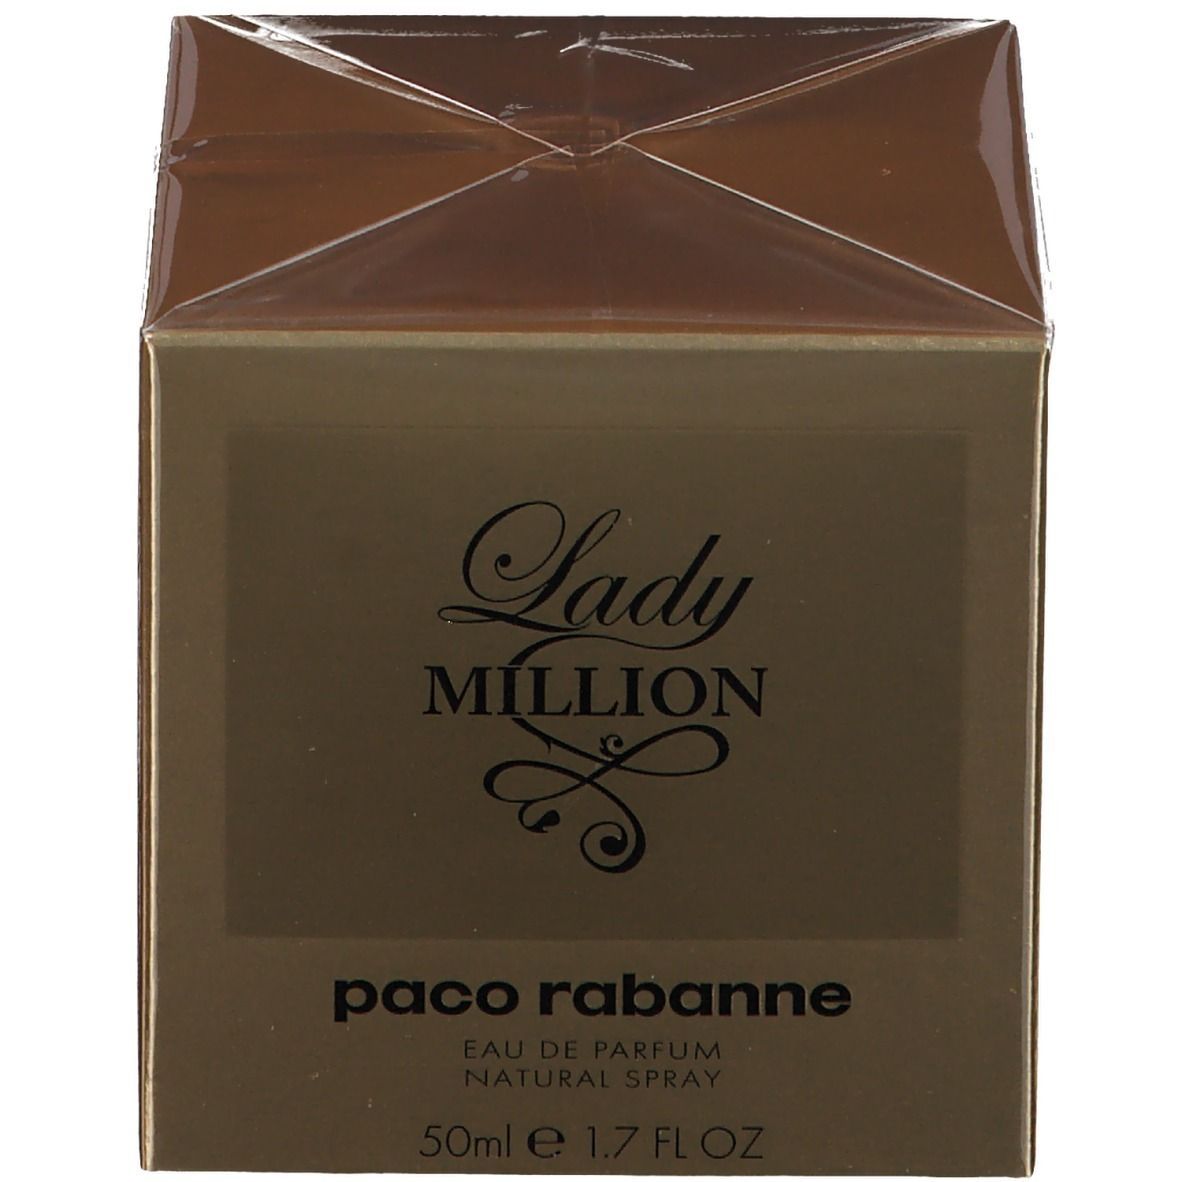 paco rabanne Lady MILLION